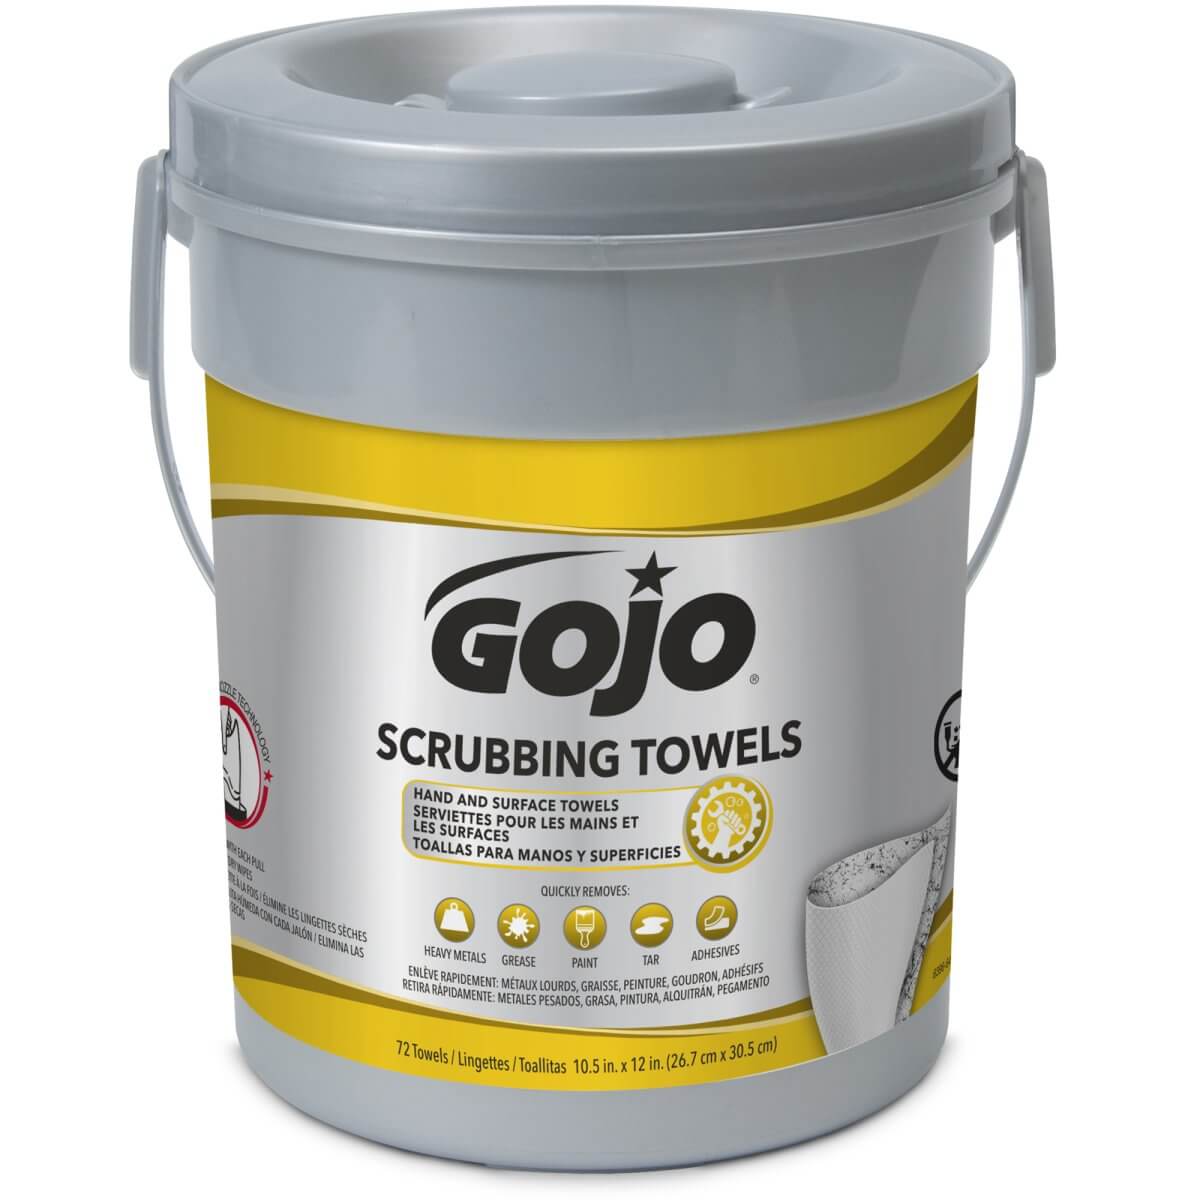 Gojo Scrubbing Towels